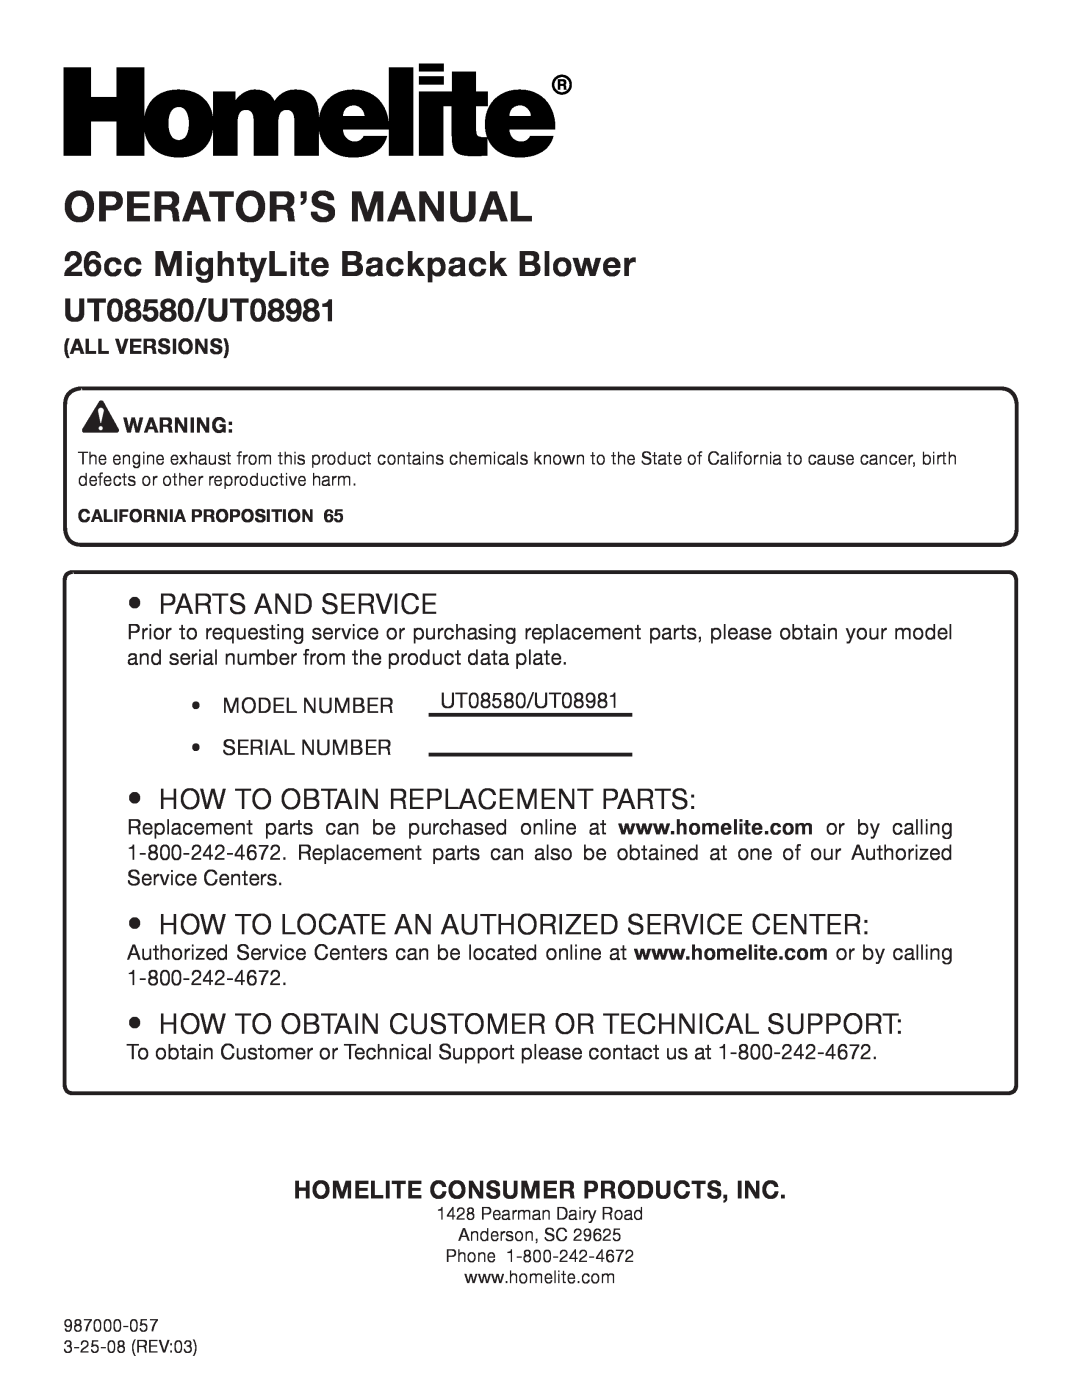 Homelite manual Homelite Consumer Products, Inc, Operator’S Manual, 26cc MightyLite Backpack Blower, UT08580/UT08981 